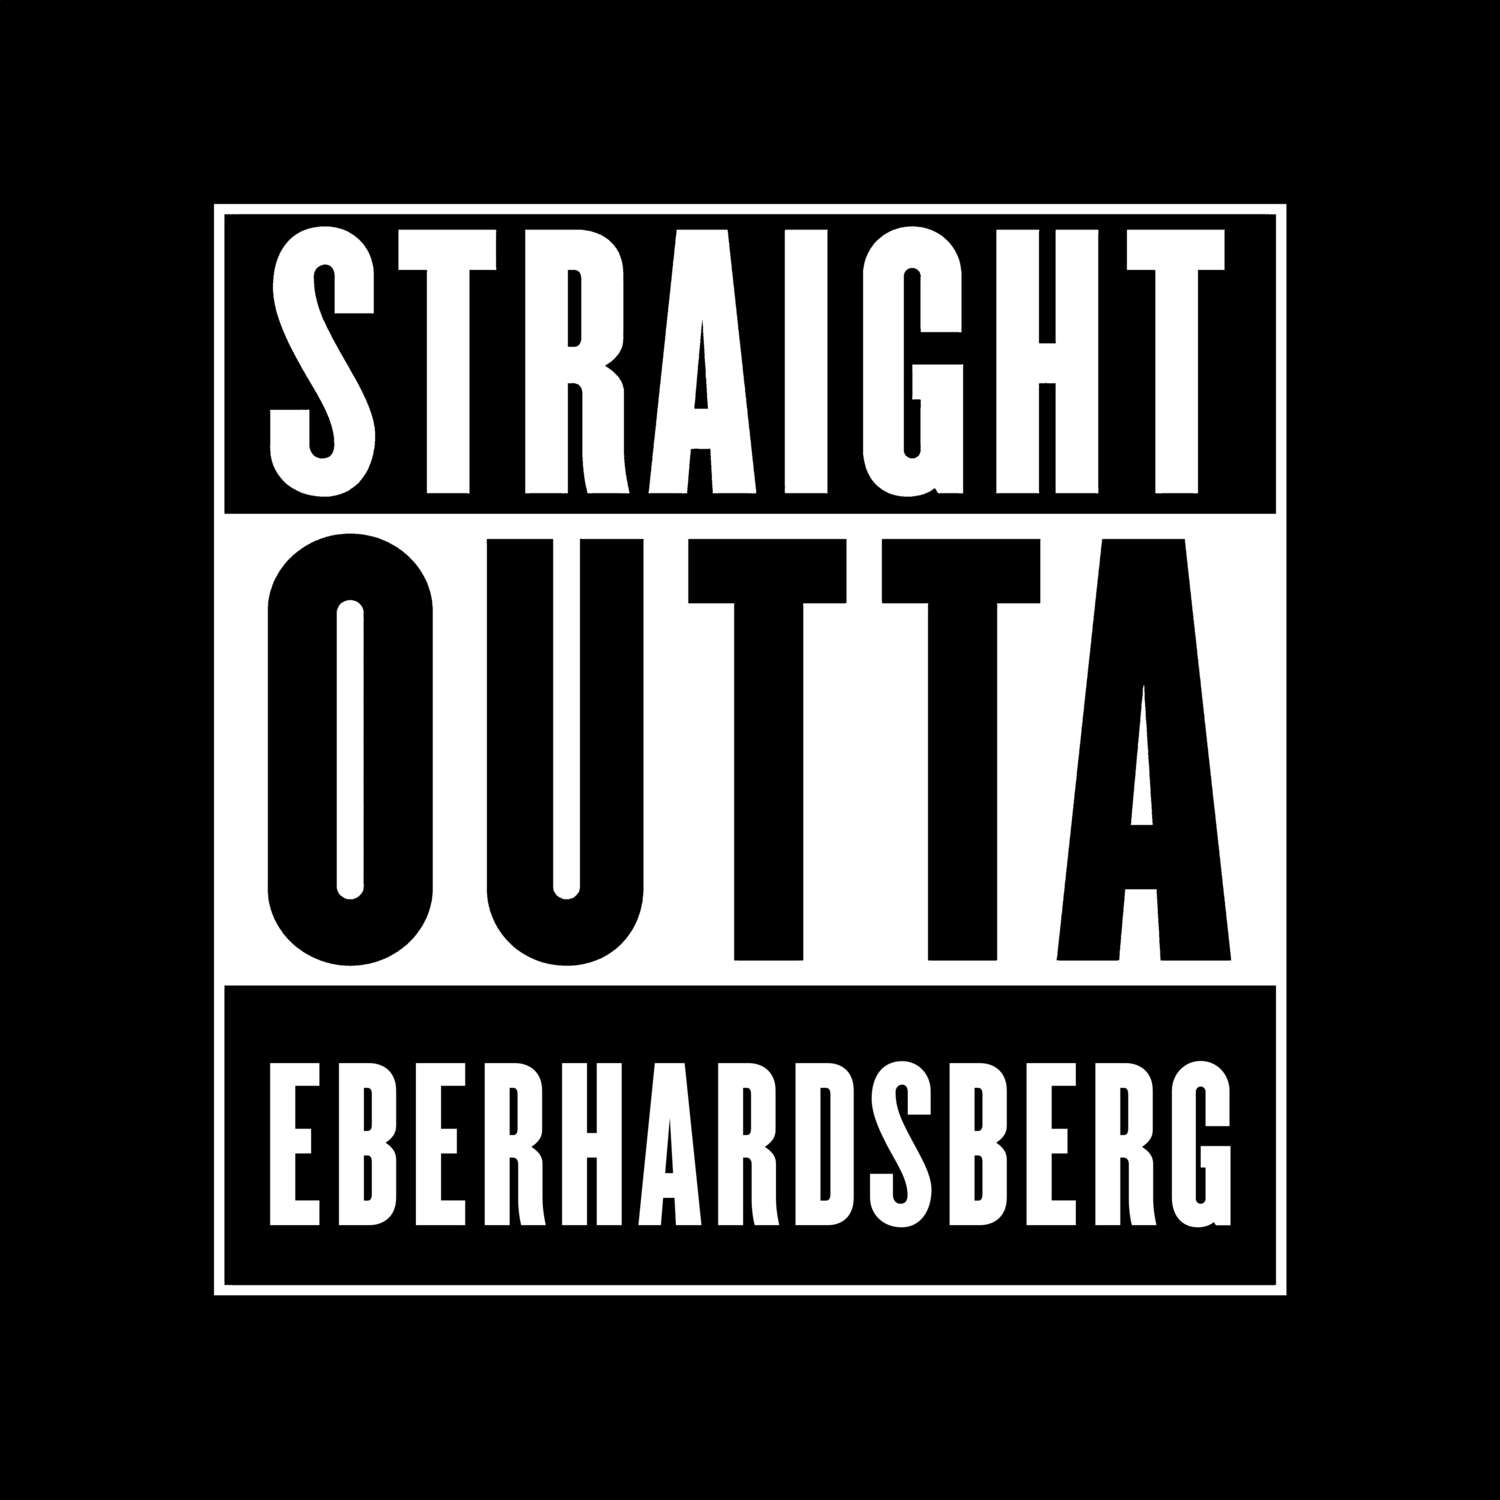 Eberhardsberg T-Shirt »Straight Outta«